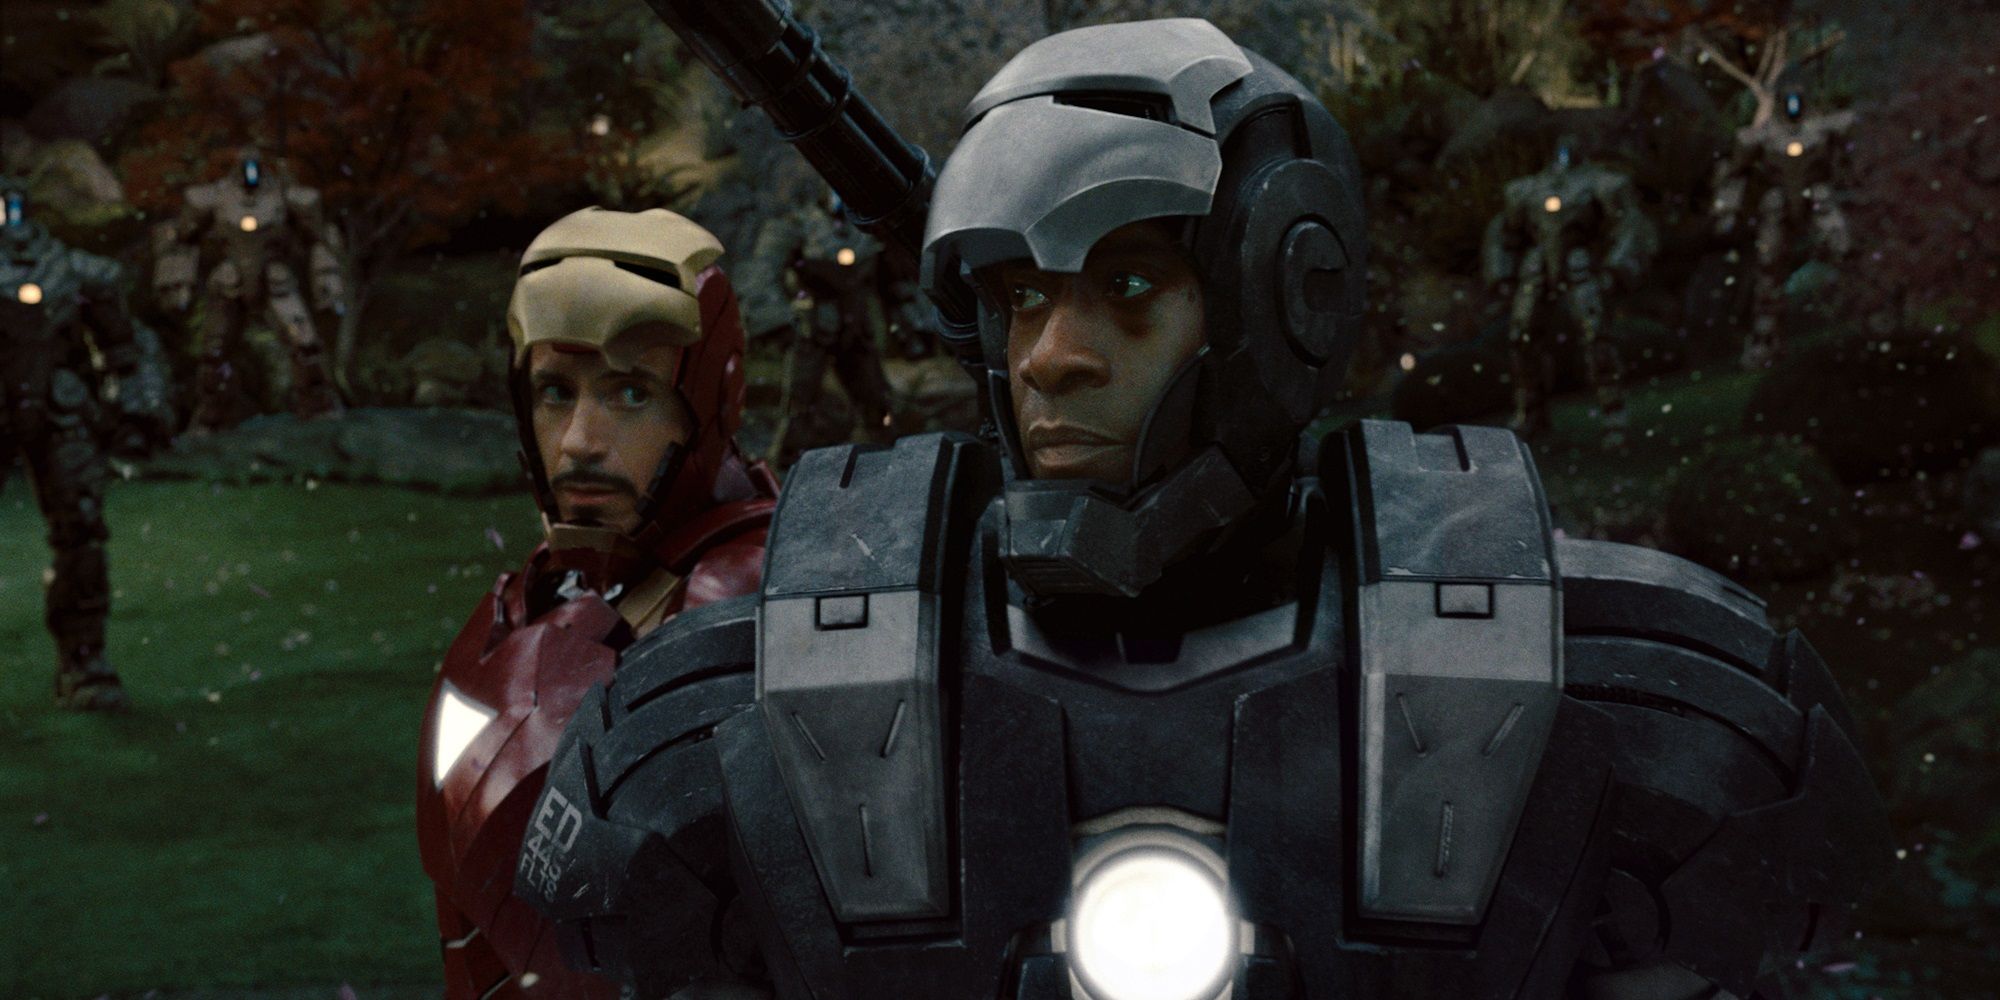 Tony and Rhodey in Iron Man 2